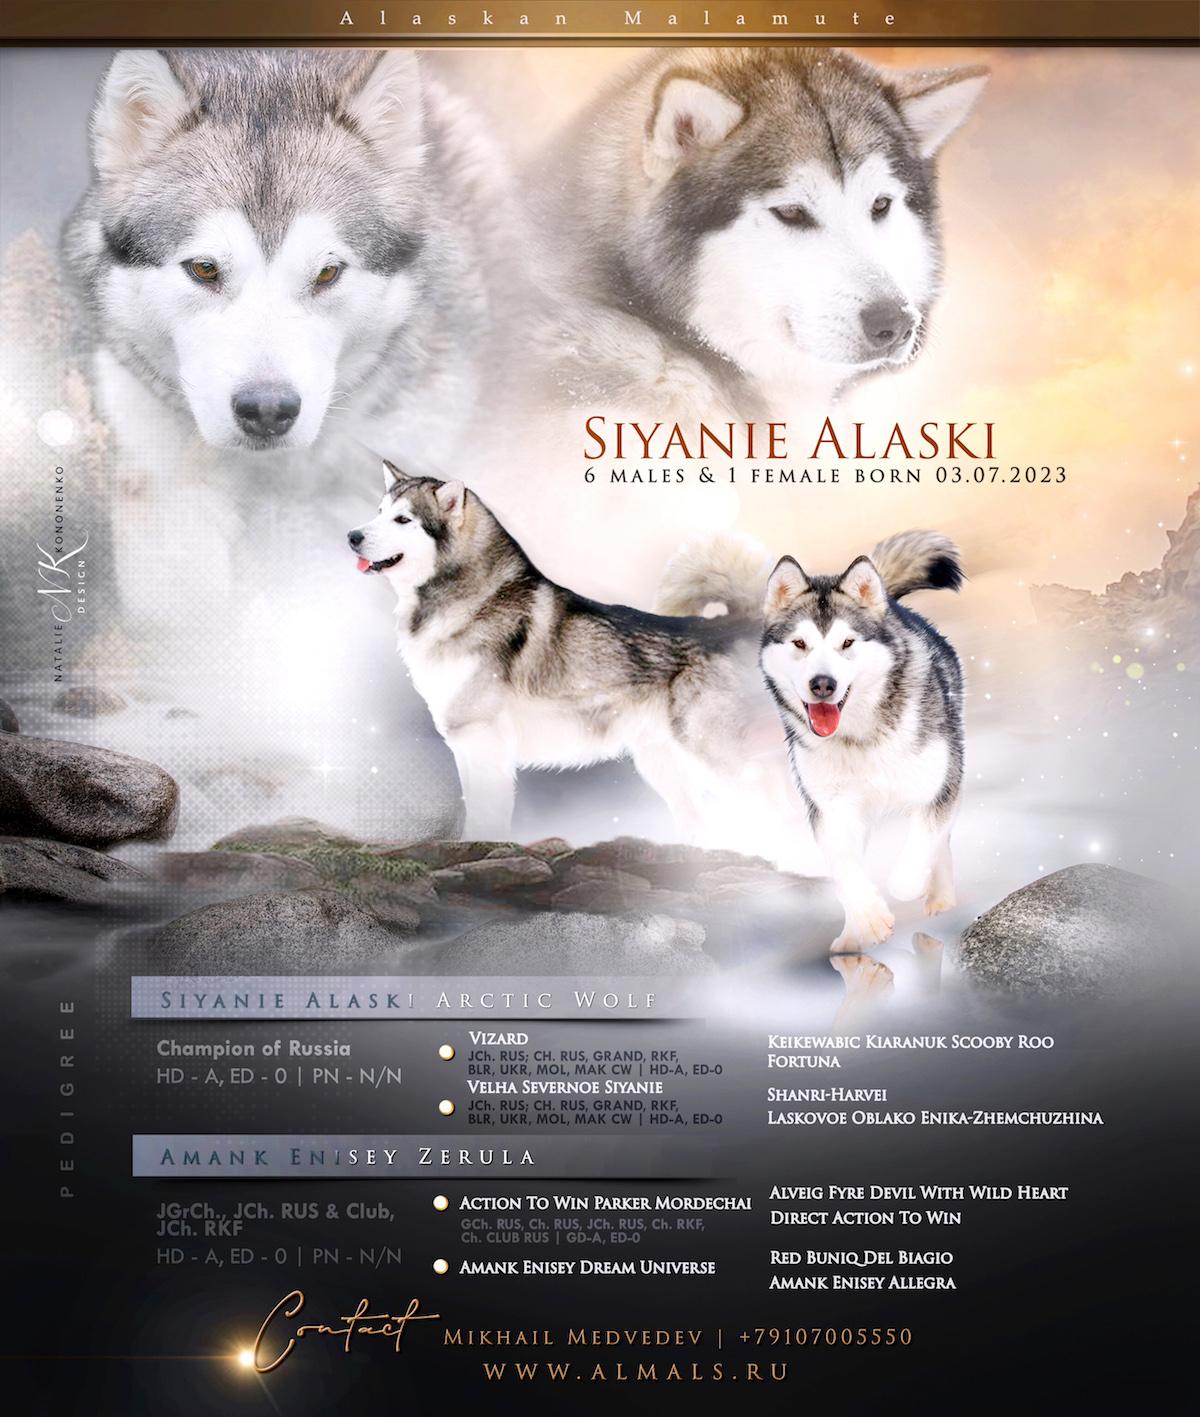 SIYANIYE ALASKI ARCTIC WOLF/AMANK ENISEY ZERULA